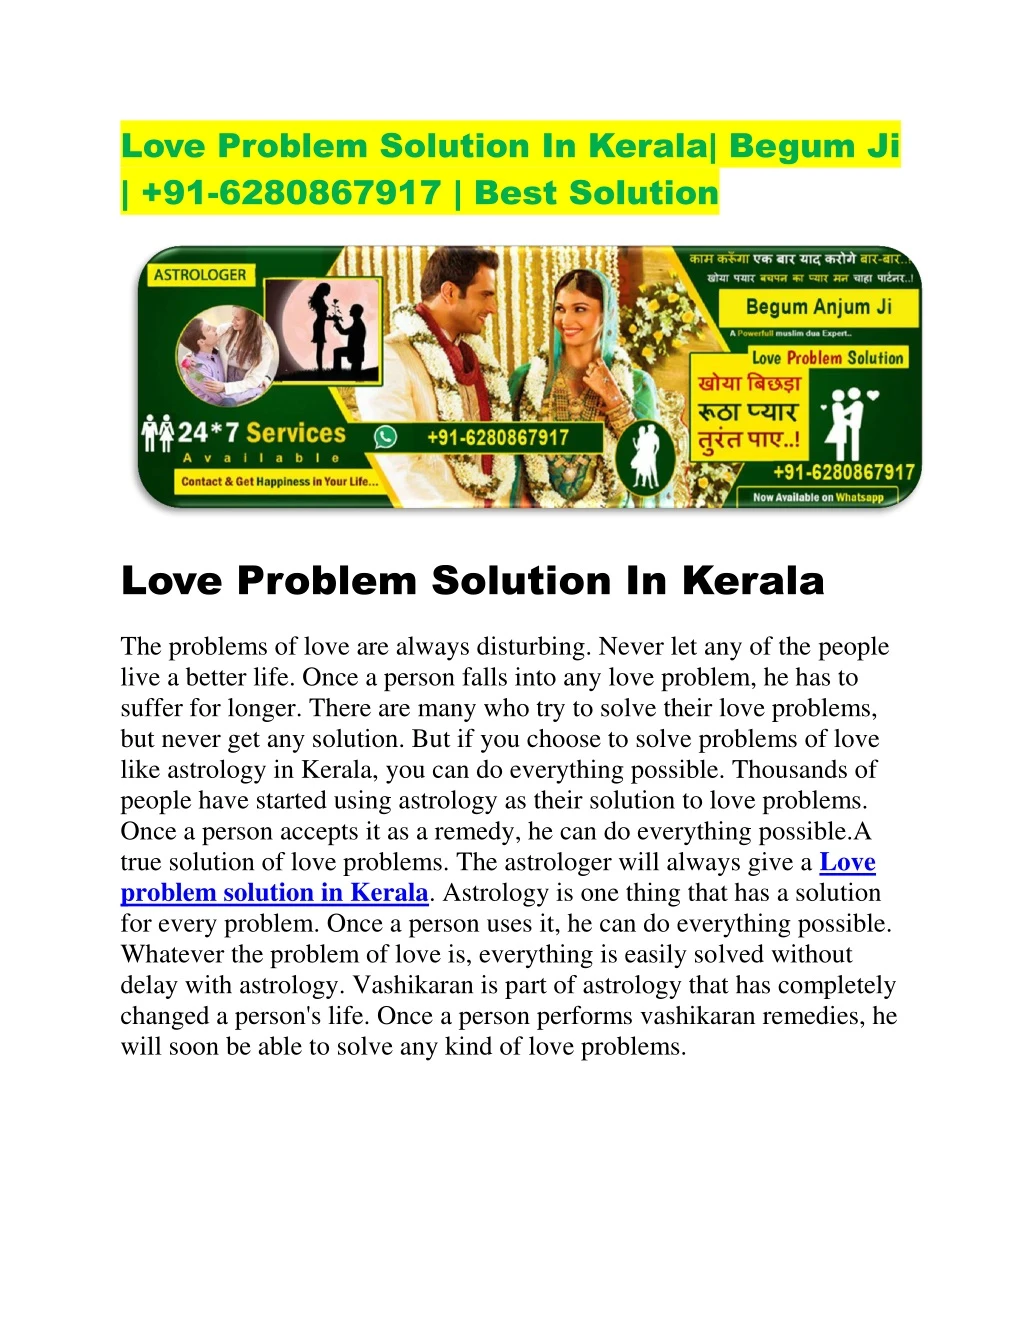 love problem solution in kerala begum